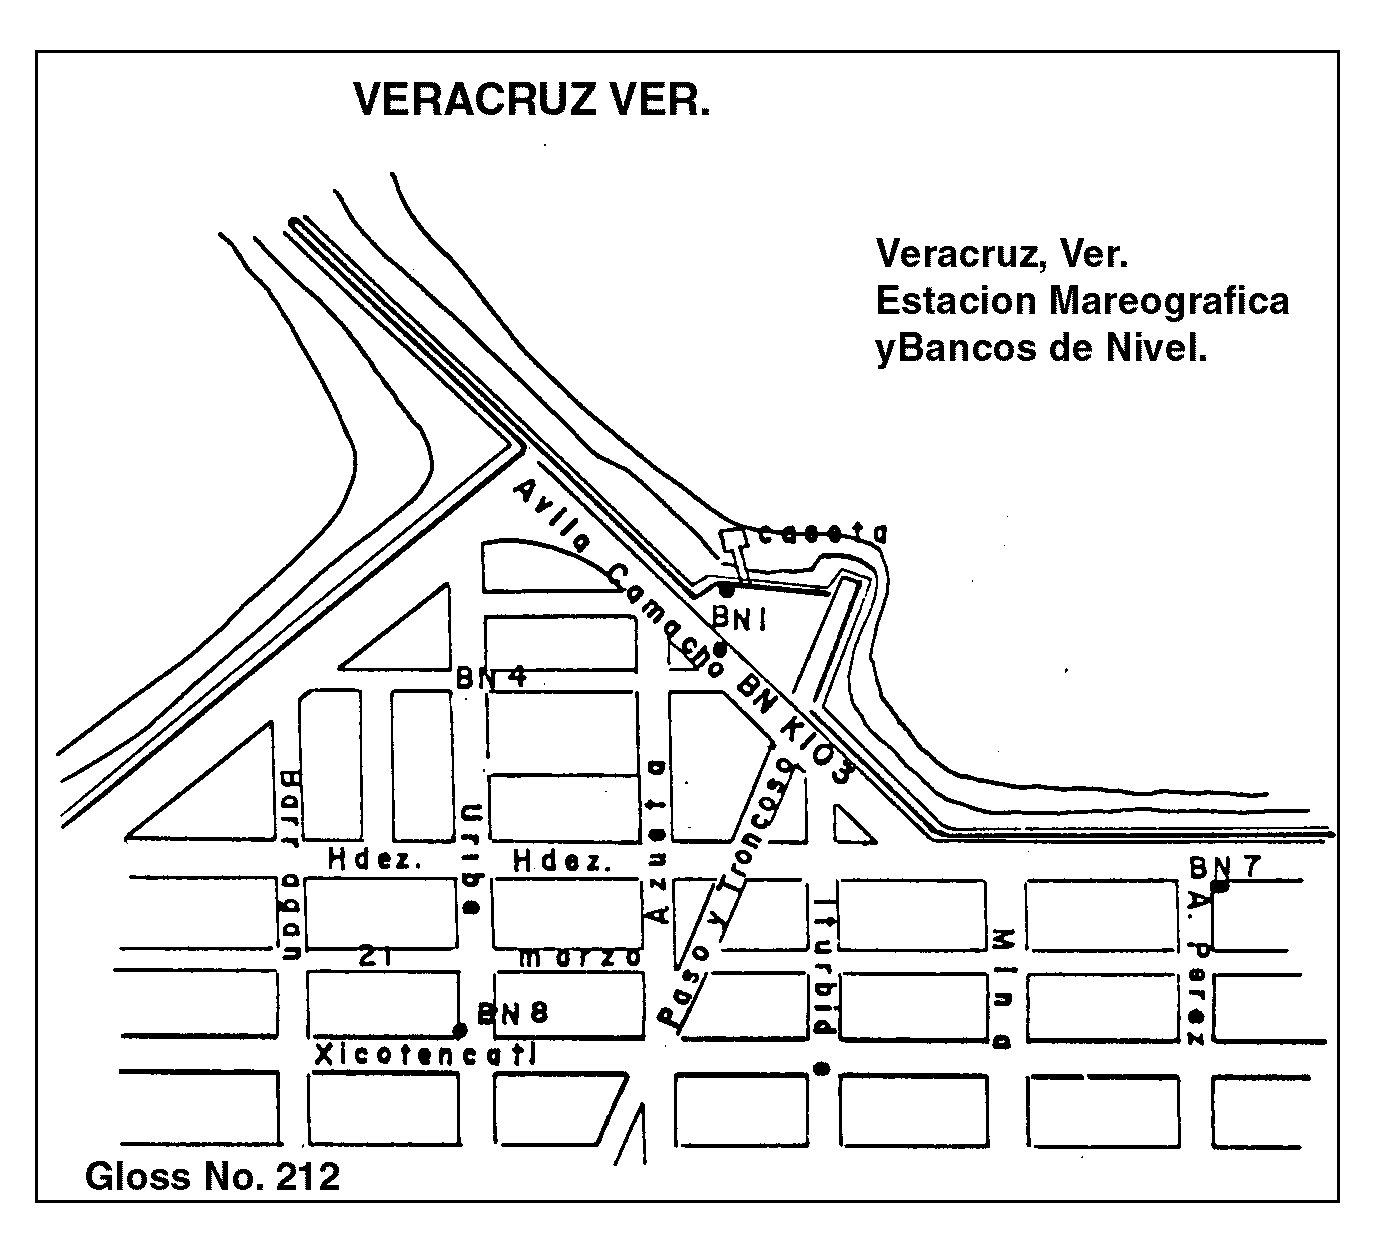 Location map for Veracruz, Ver., Mexico